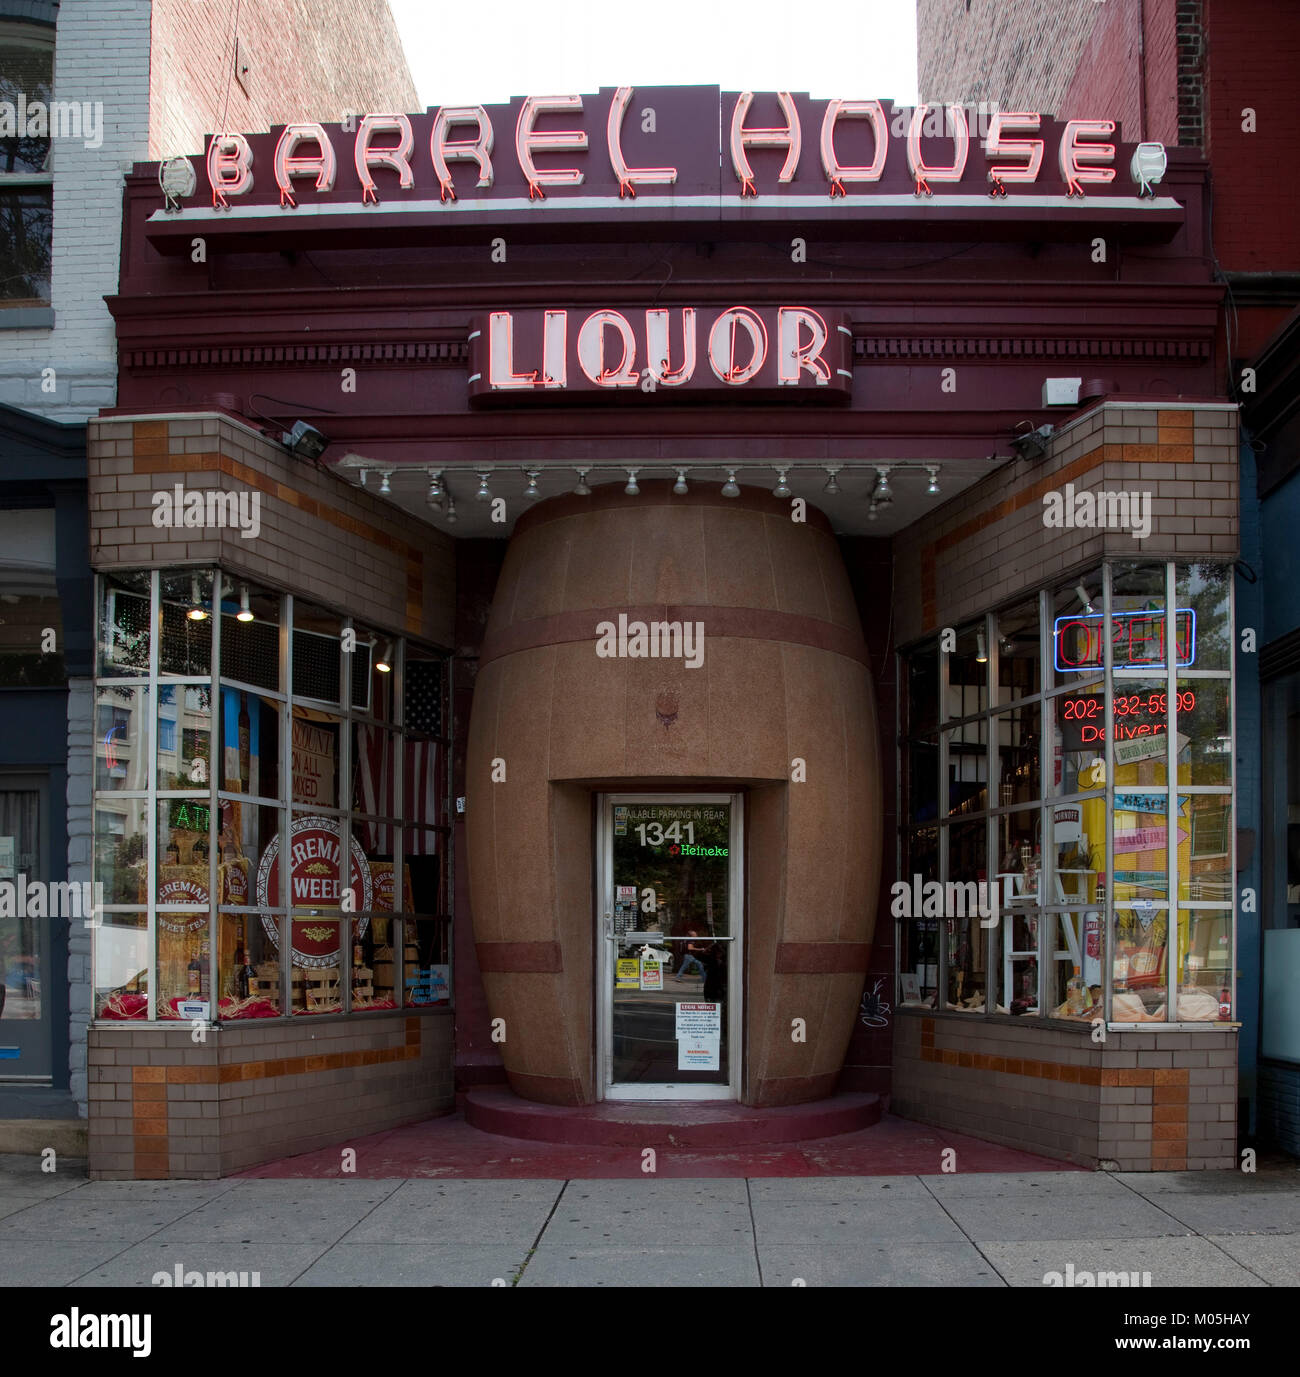 Barrel House Liquor Store Stock Photo